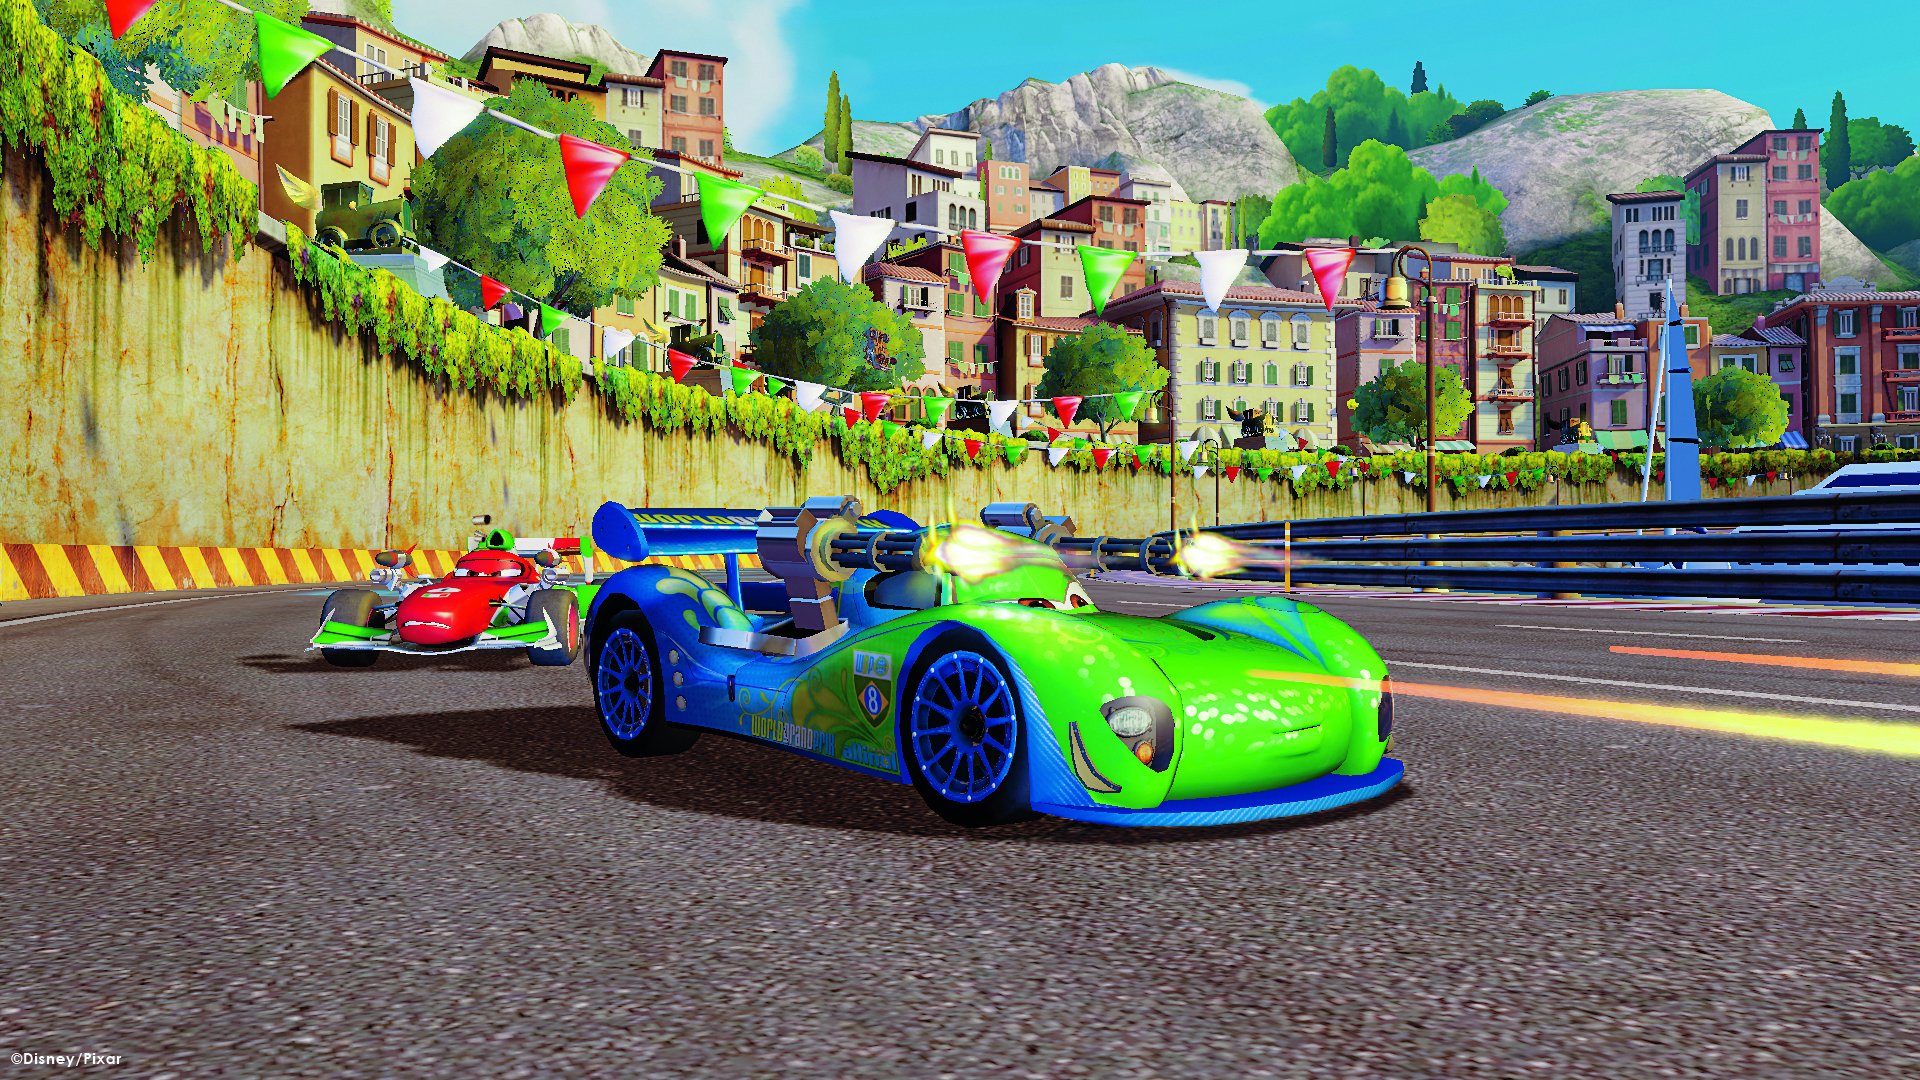 Disney Pixar Cars 2 The Video Game 3